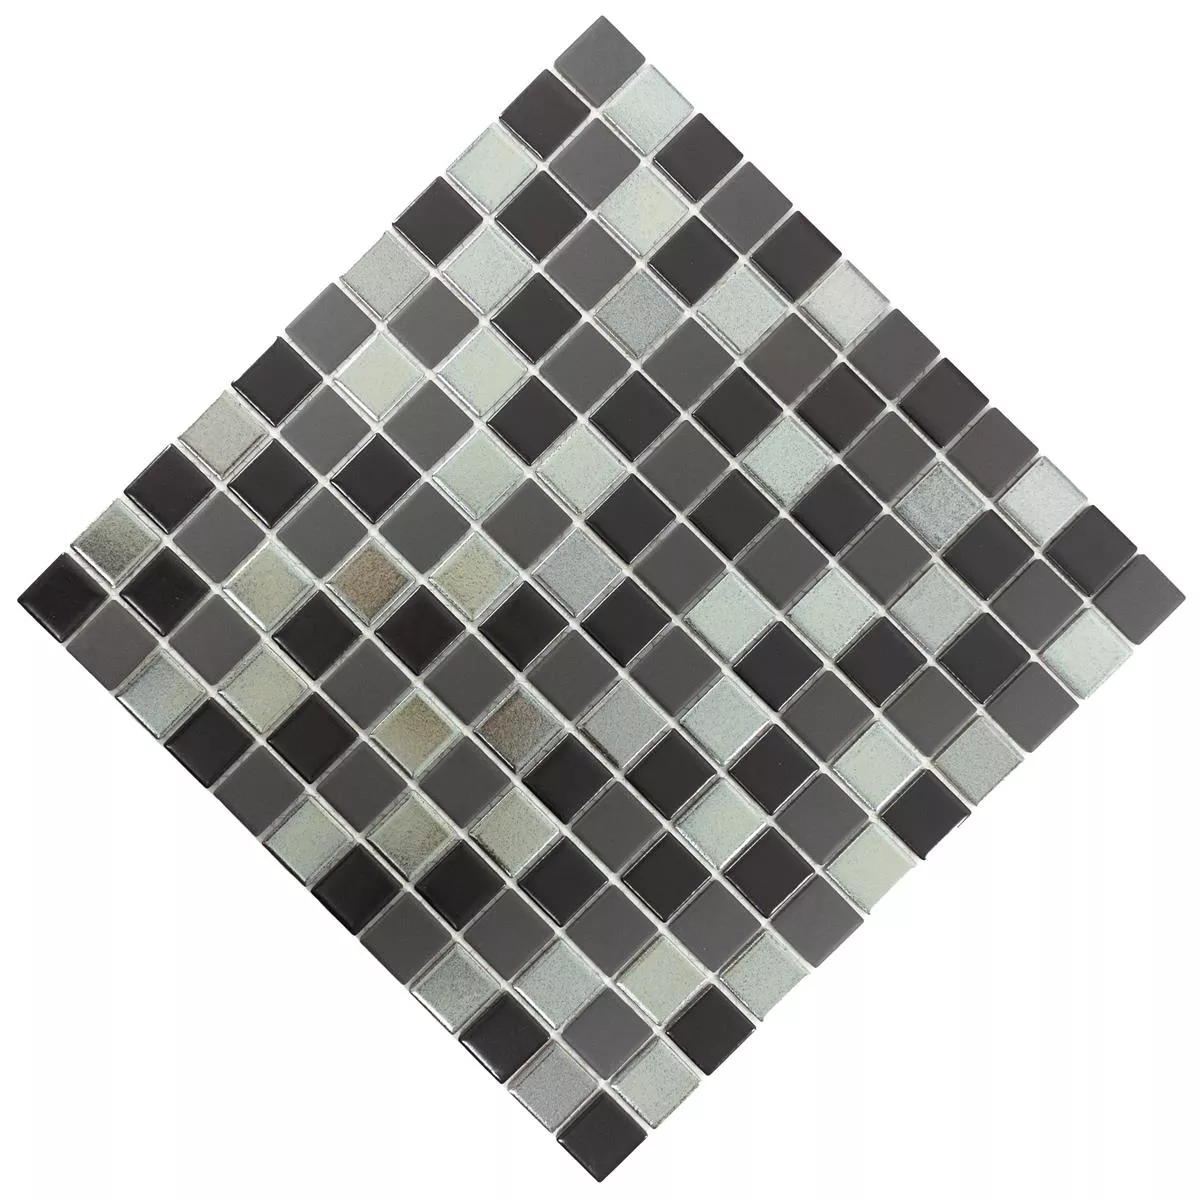 Ceramic Mosaic Tile Moonstone Black Grey